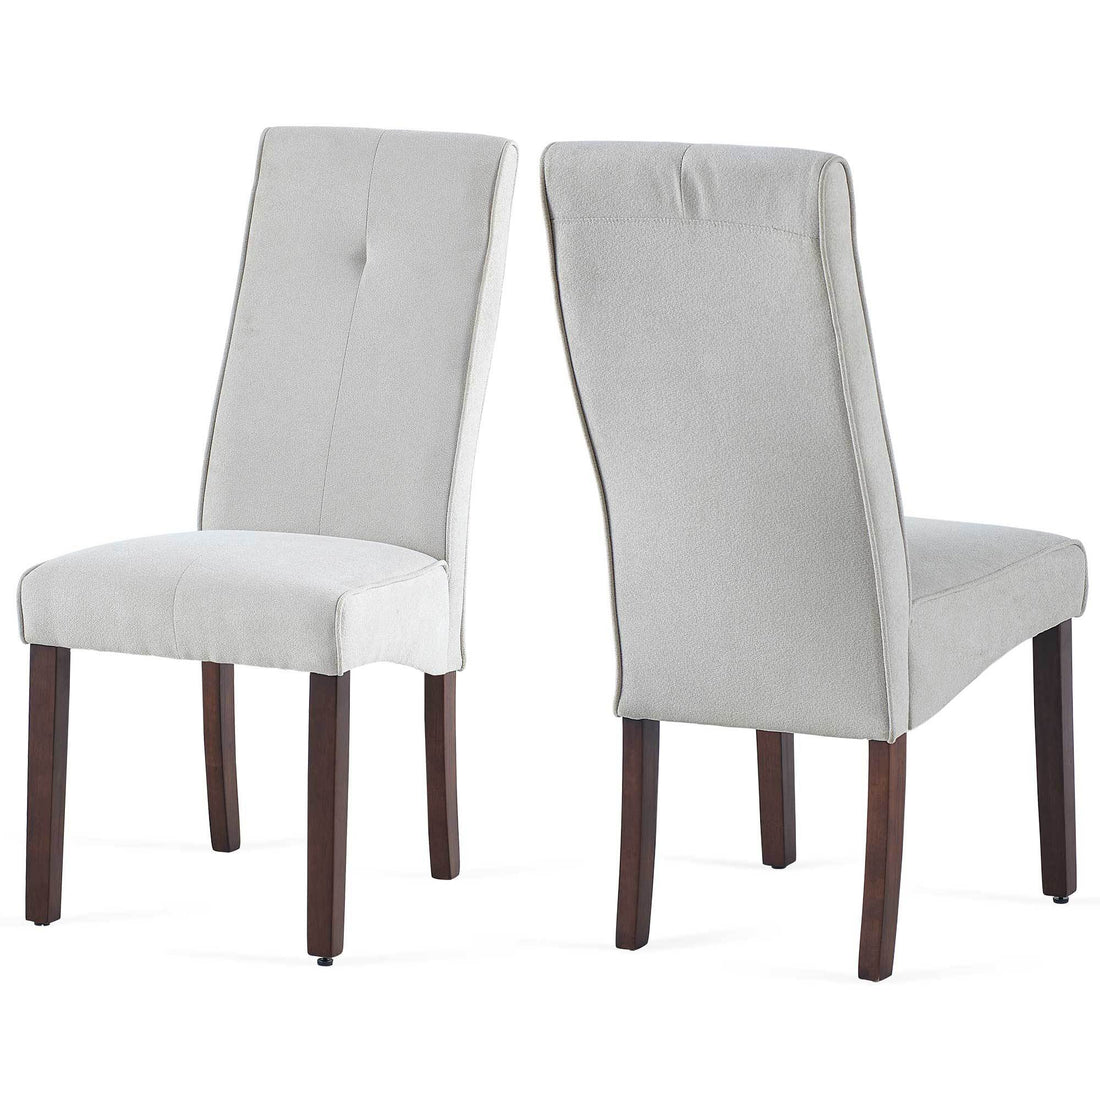 Beige Linen Upholstered Dining Chair High Back -